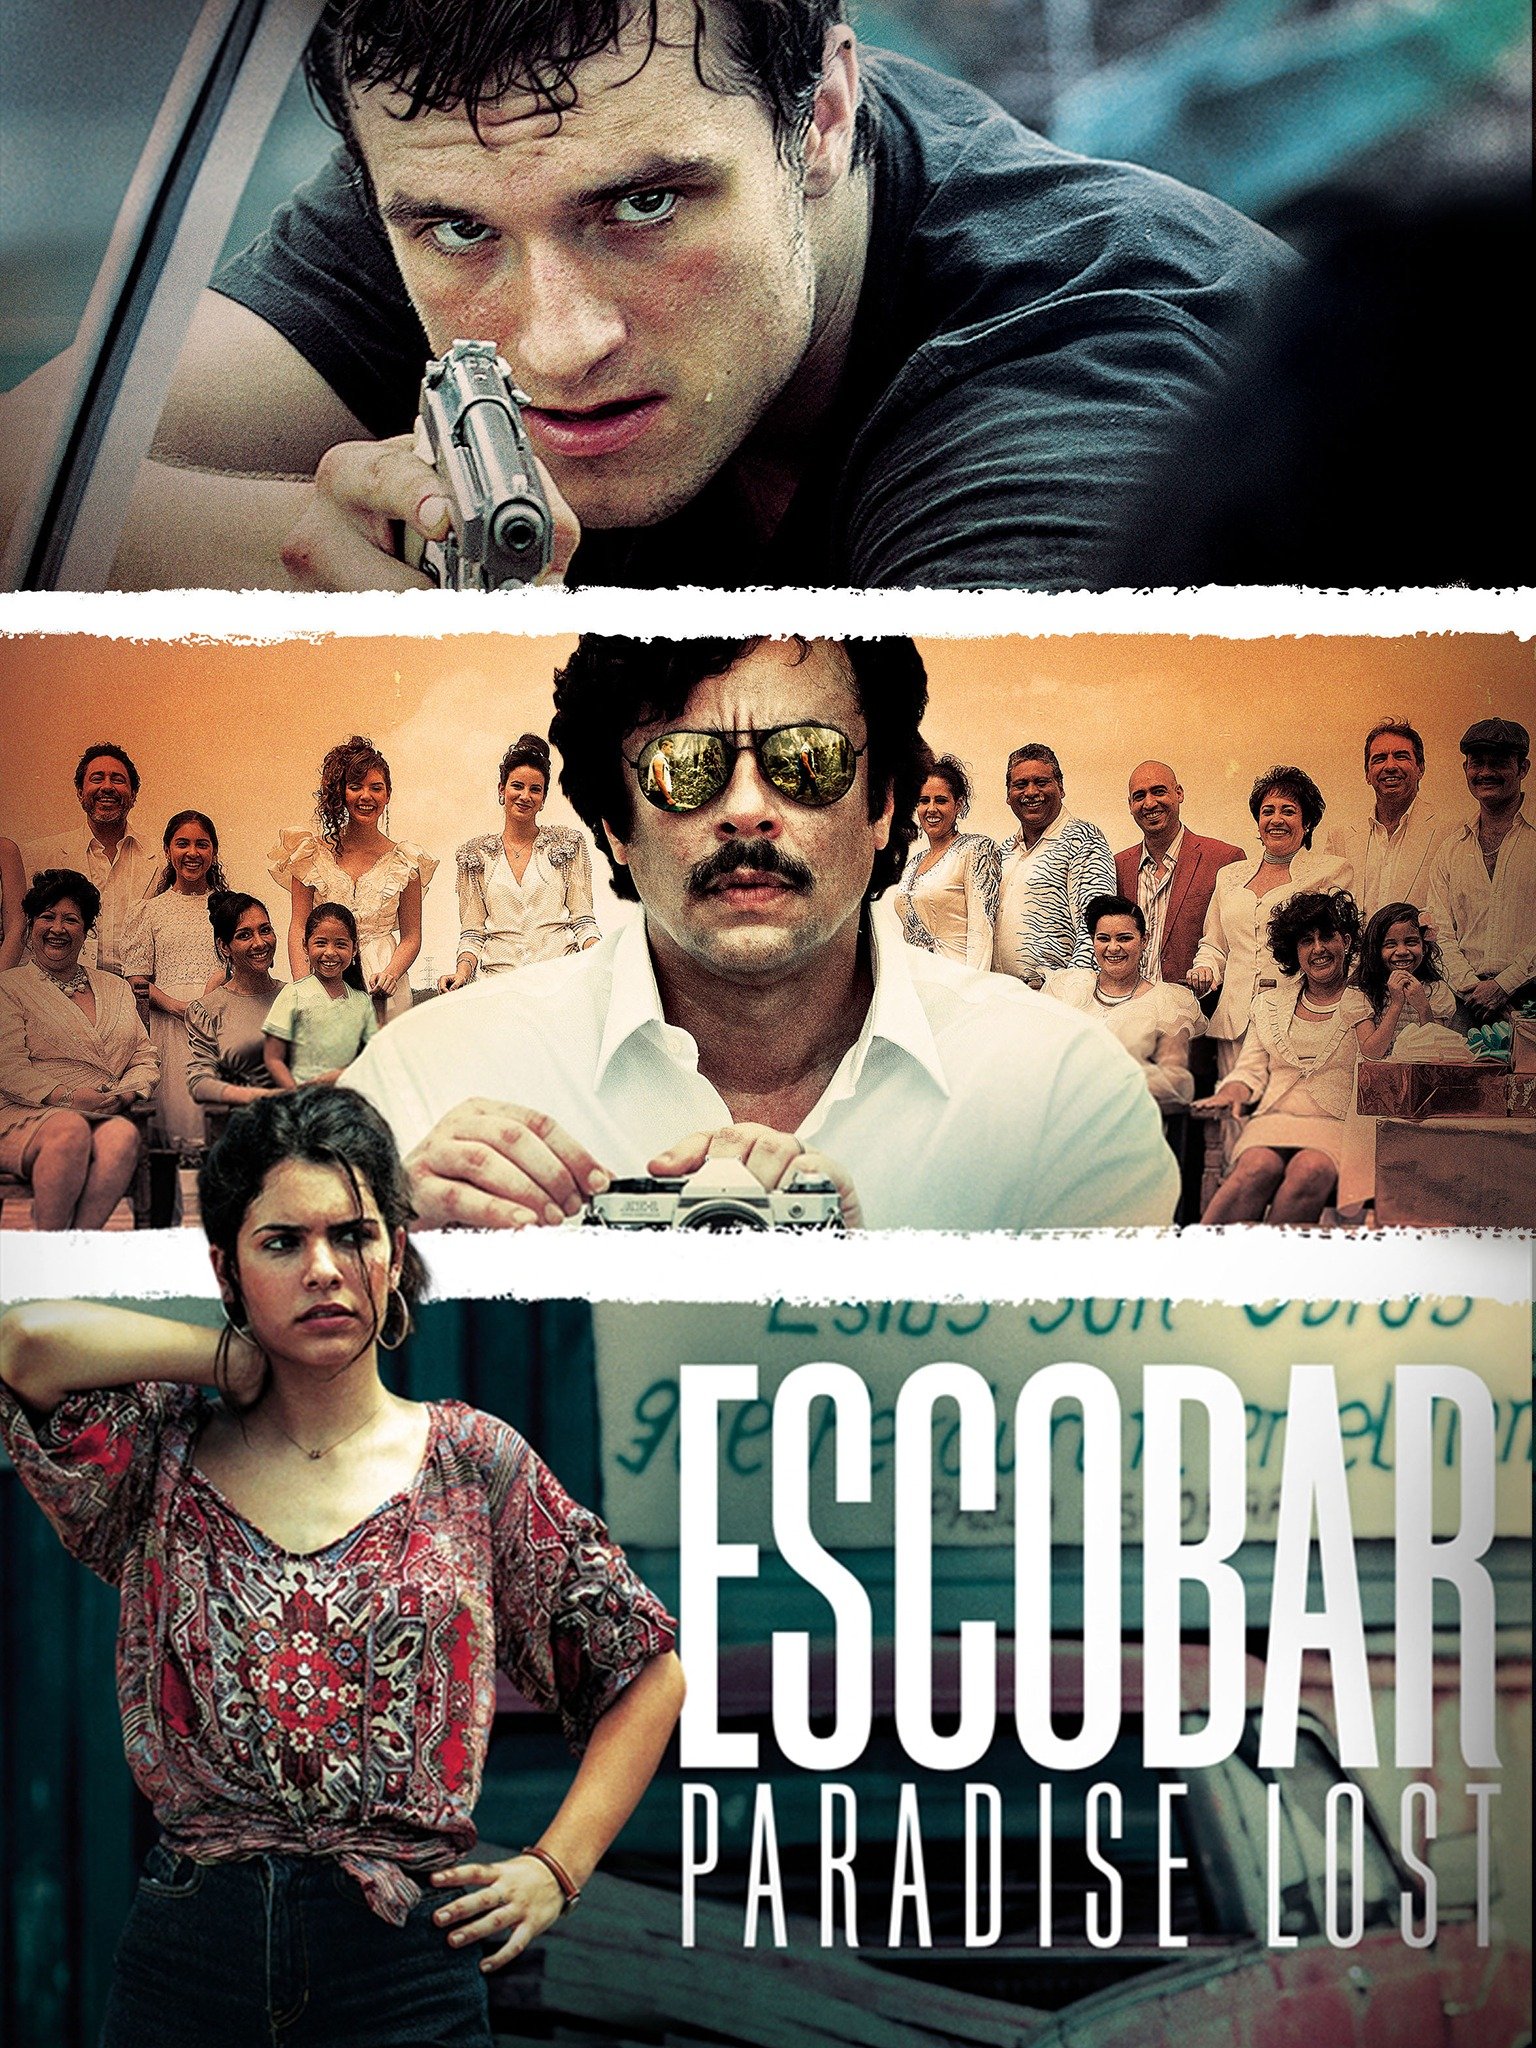 Escobar Paradise Lost Characters